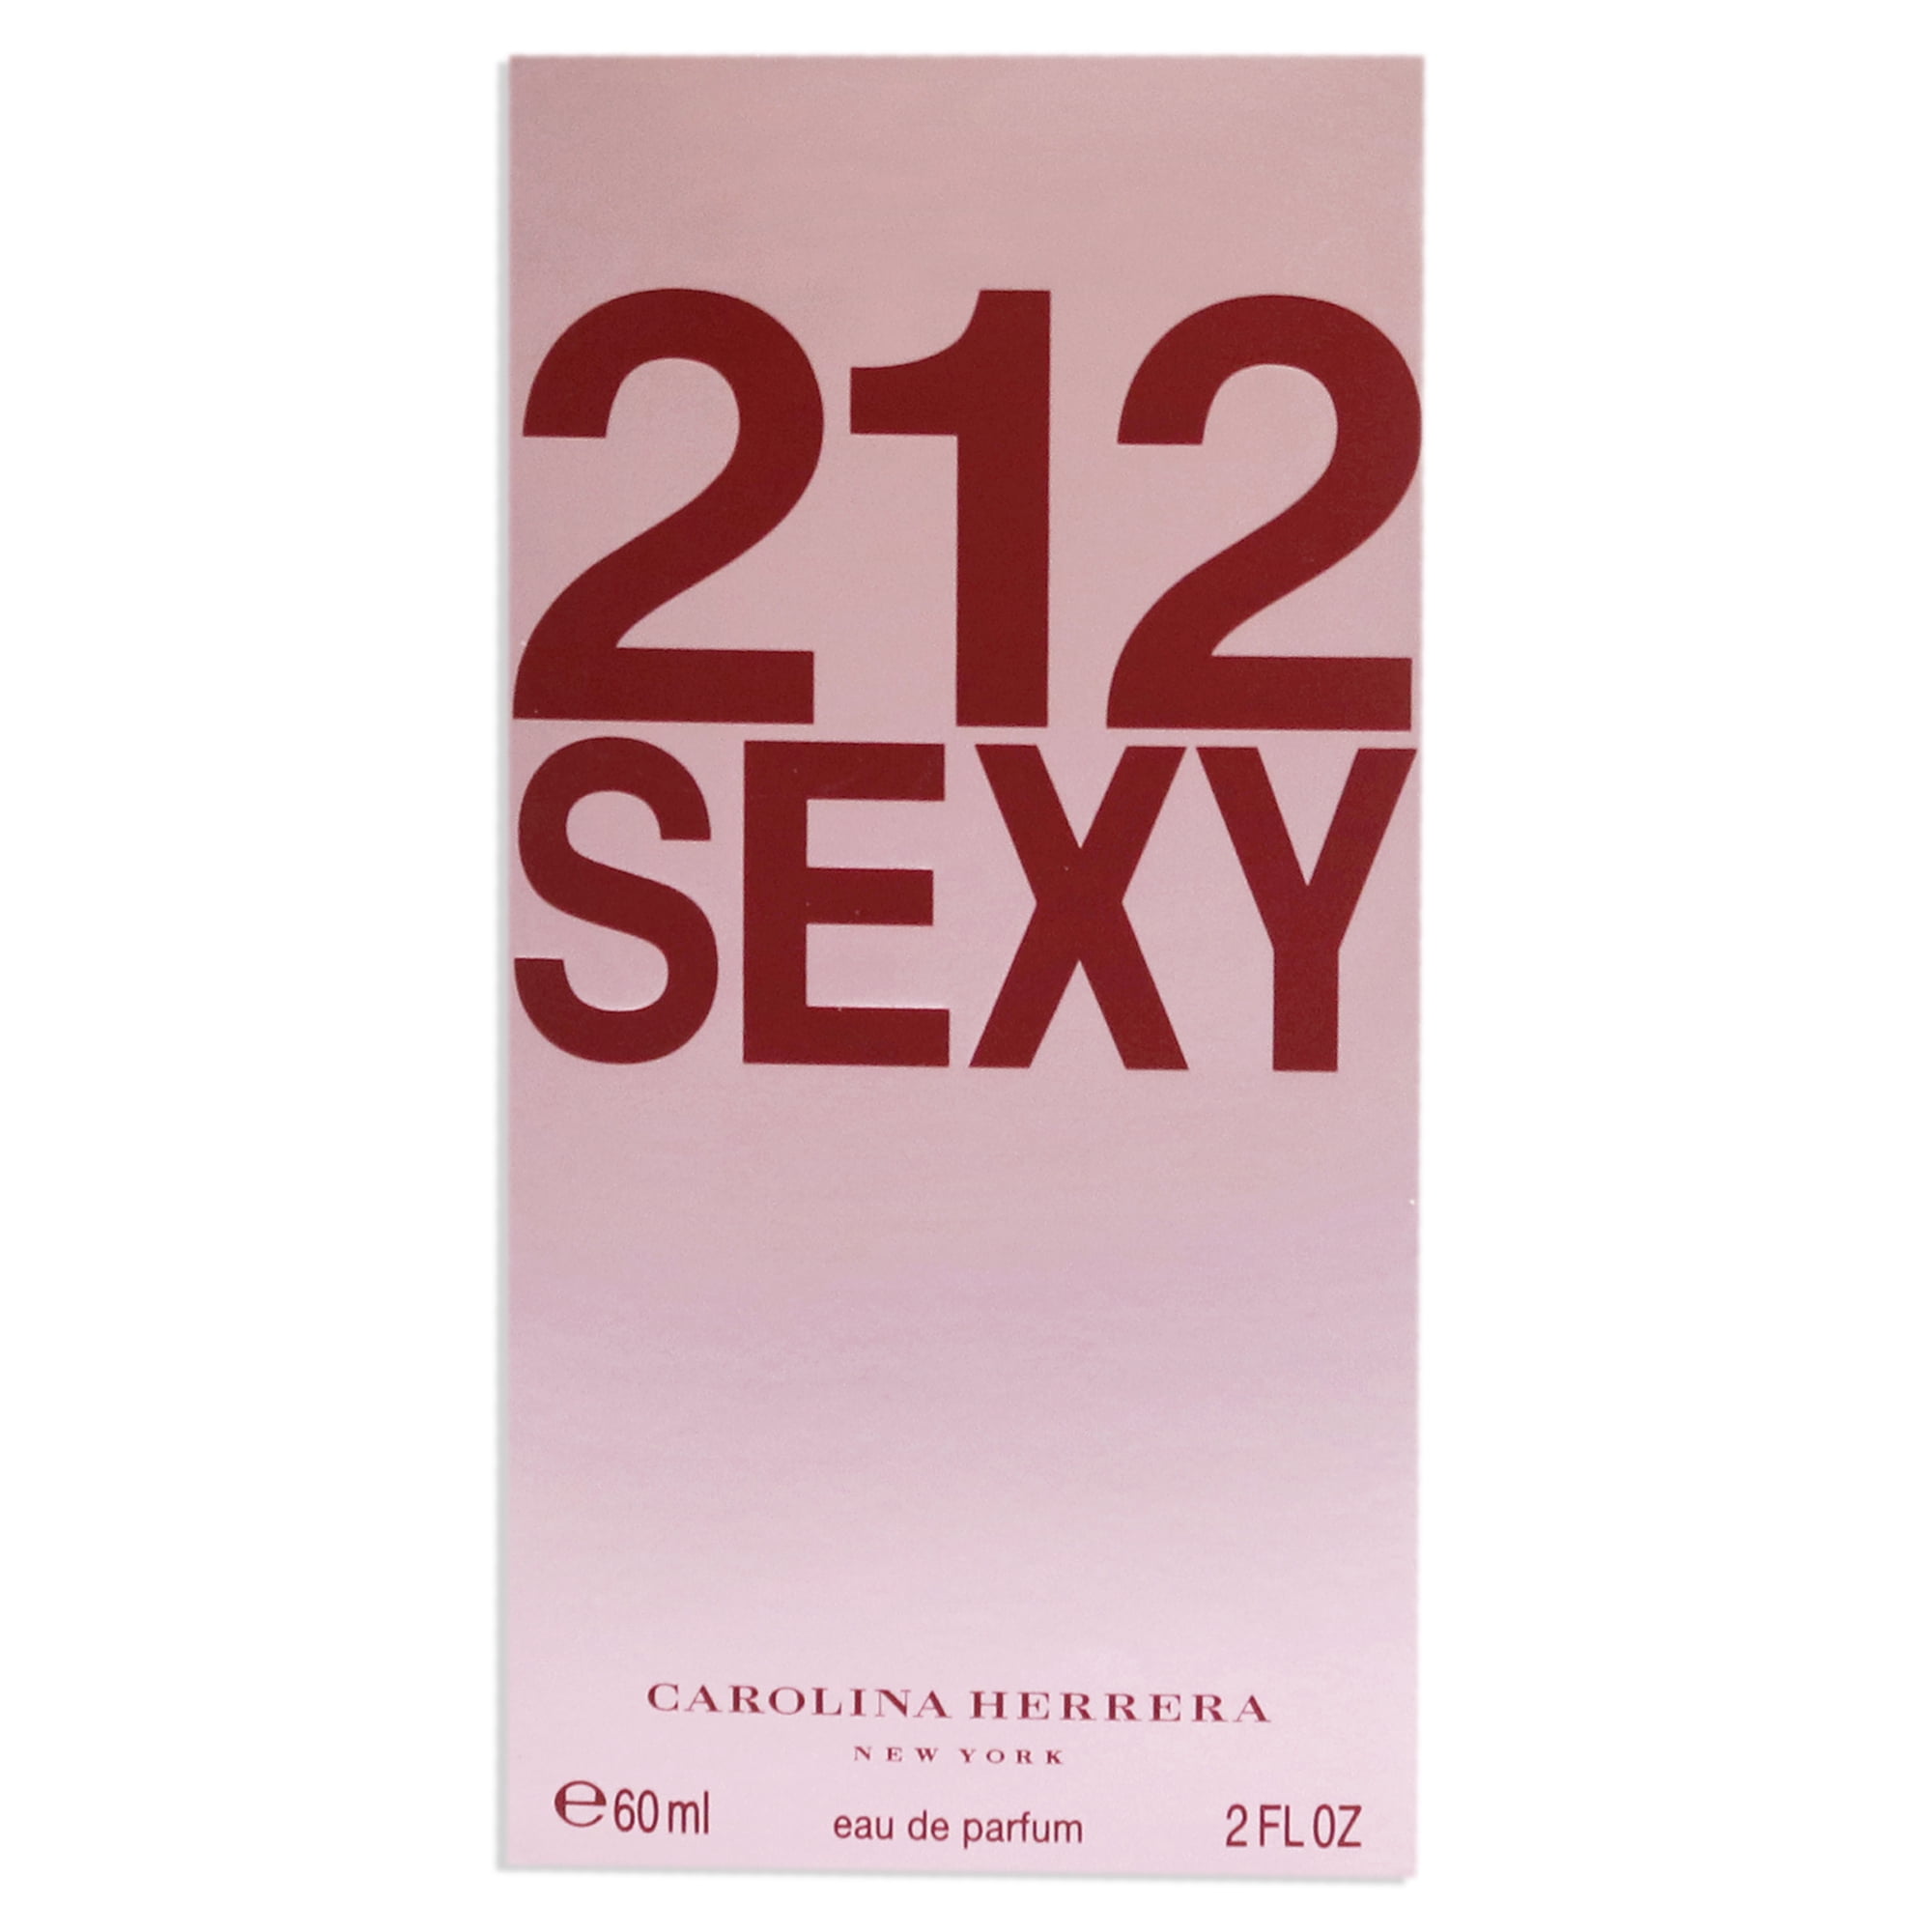 Buy Carolina Herrera 212 Sexy Eau de Parfum · Macau